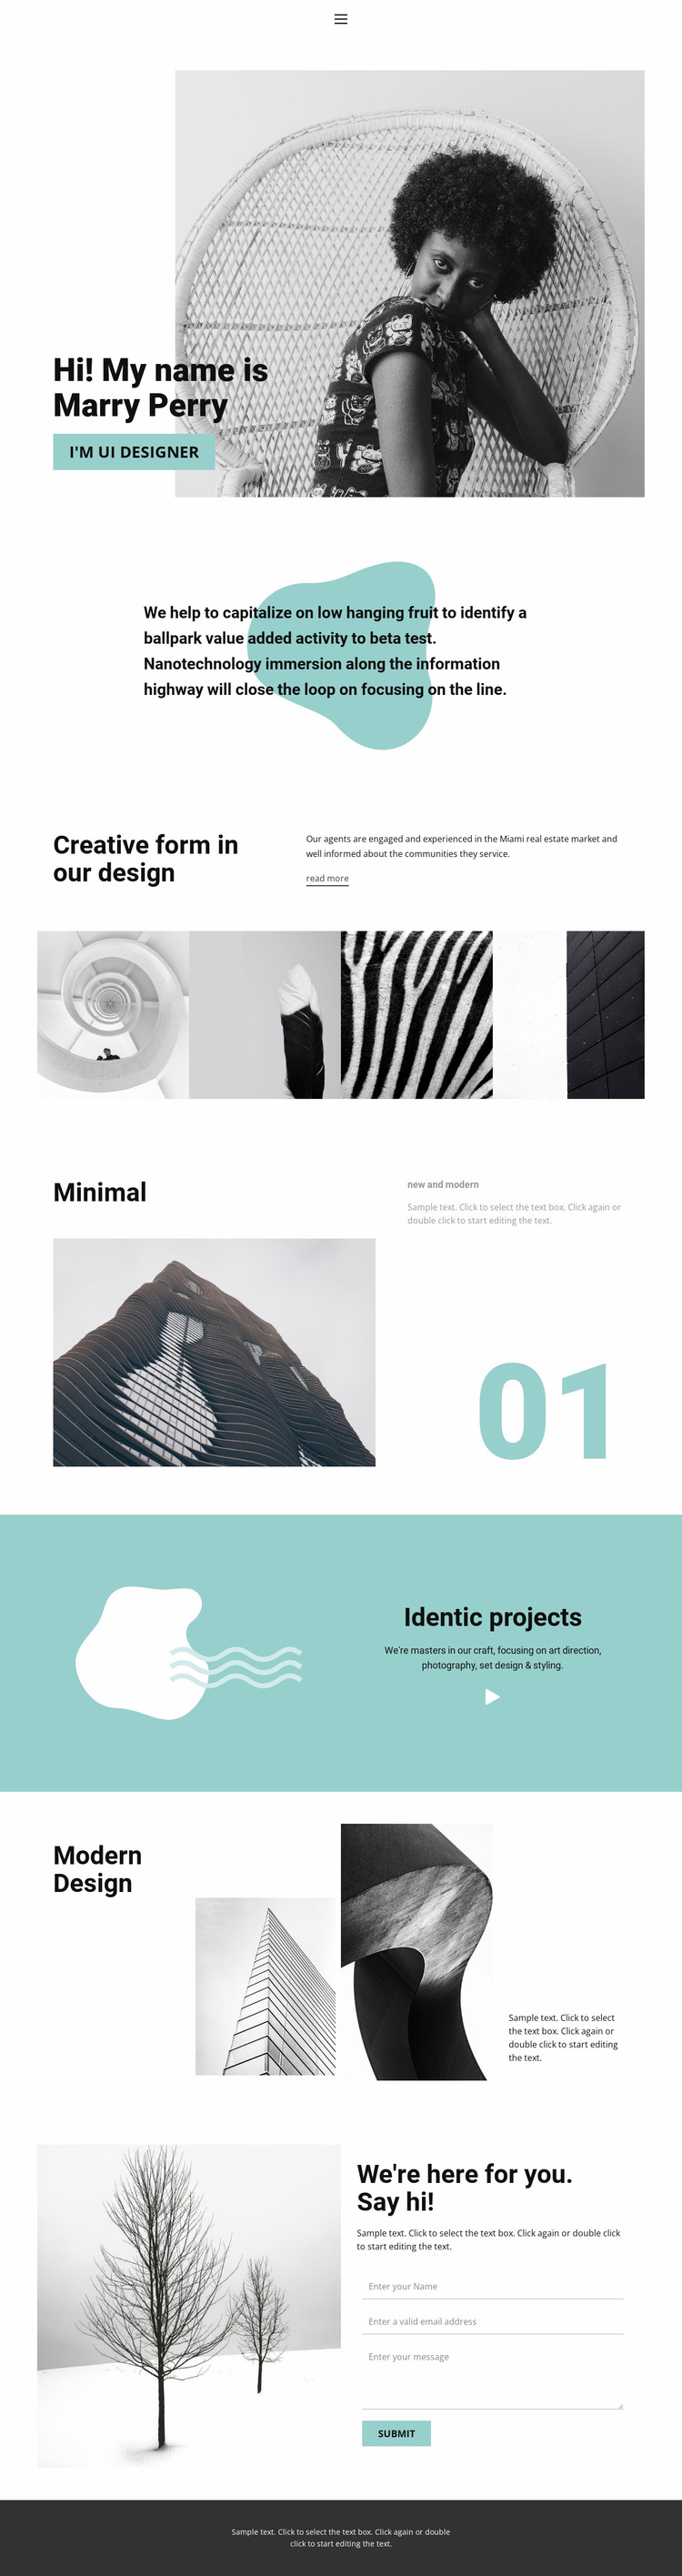 Web design from our studio Website Mockup